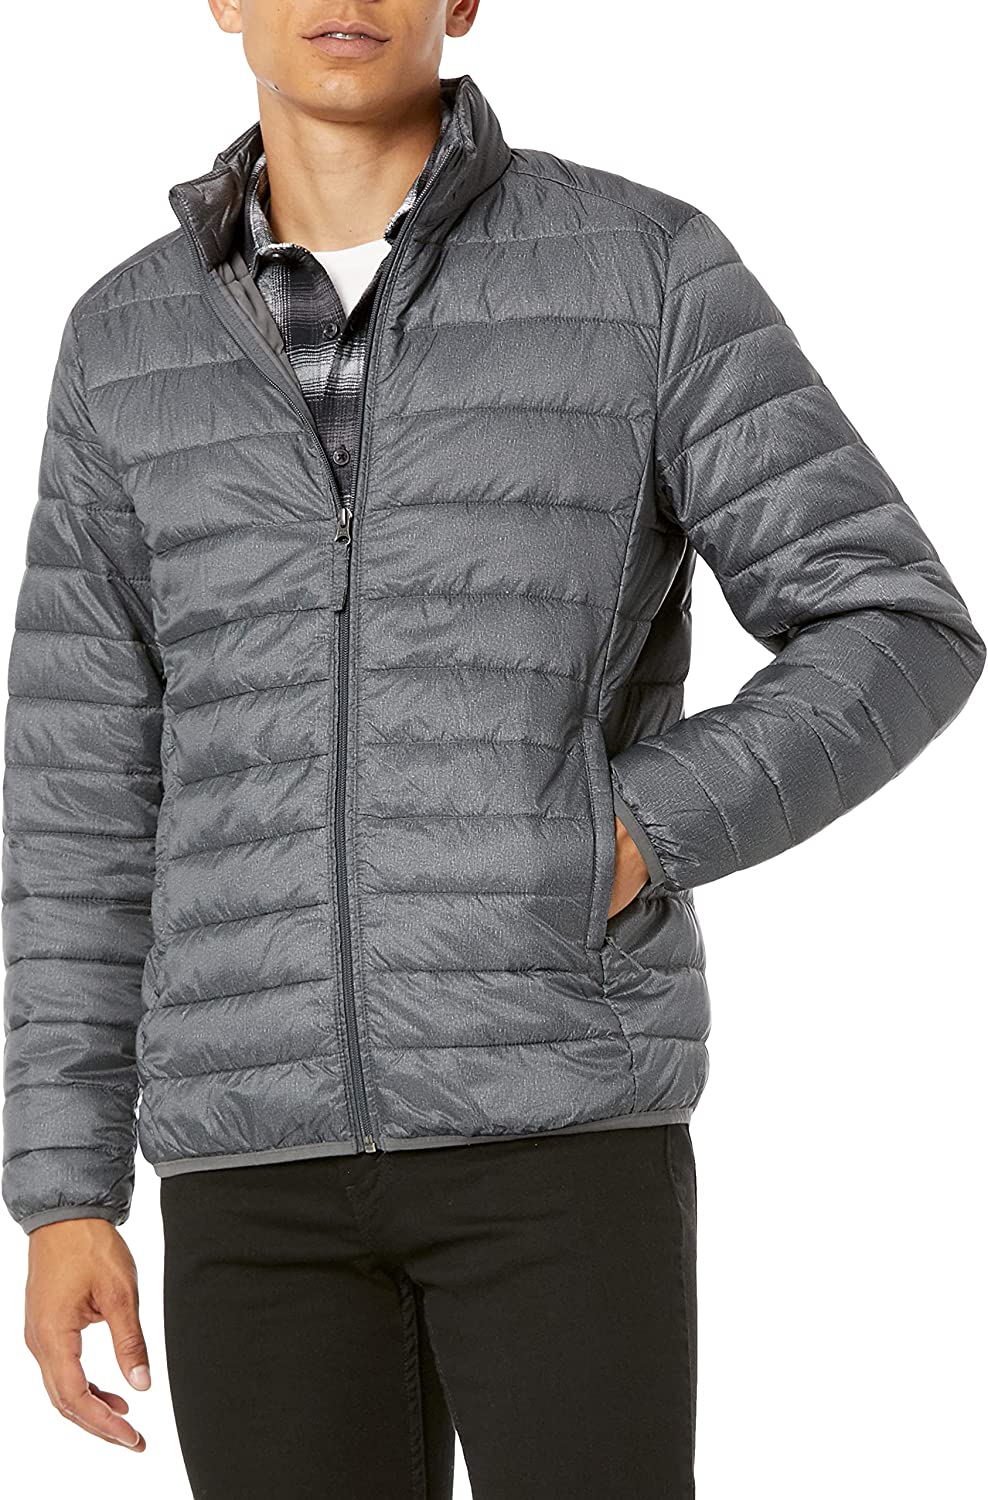 Men's Packable Lightweight Water-Resistant Puffer Jacket - Charcoal Heather